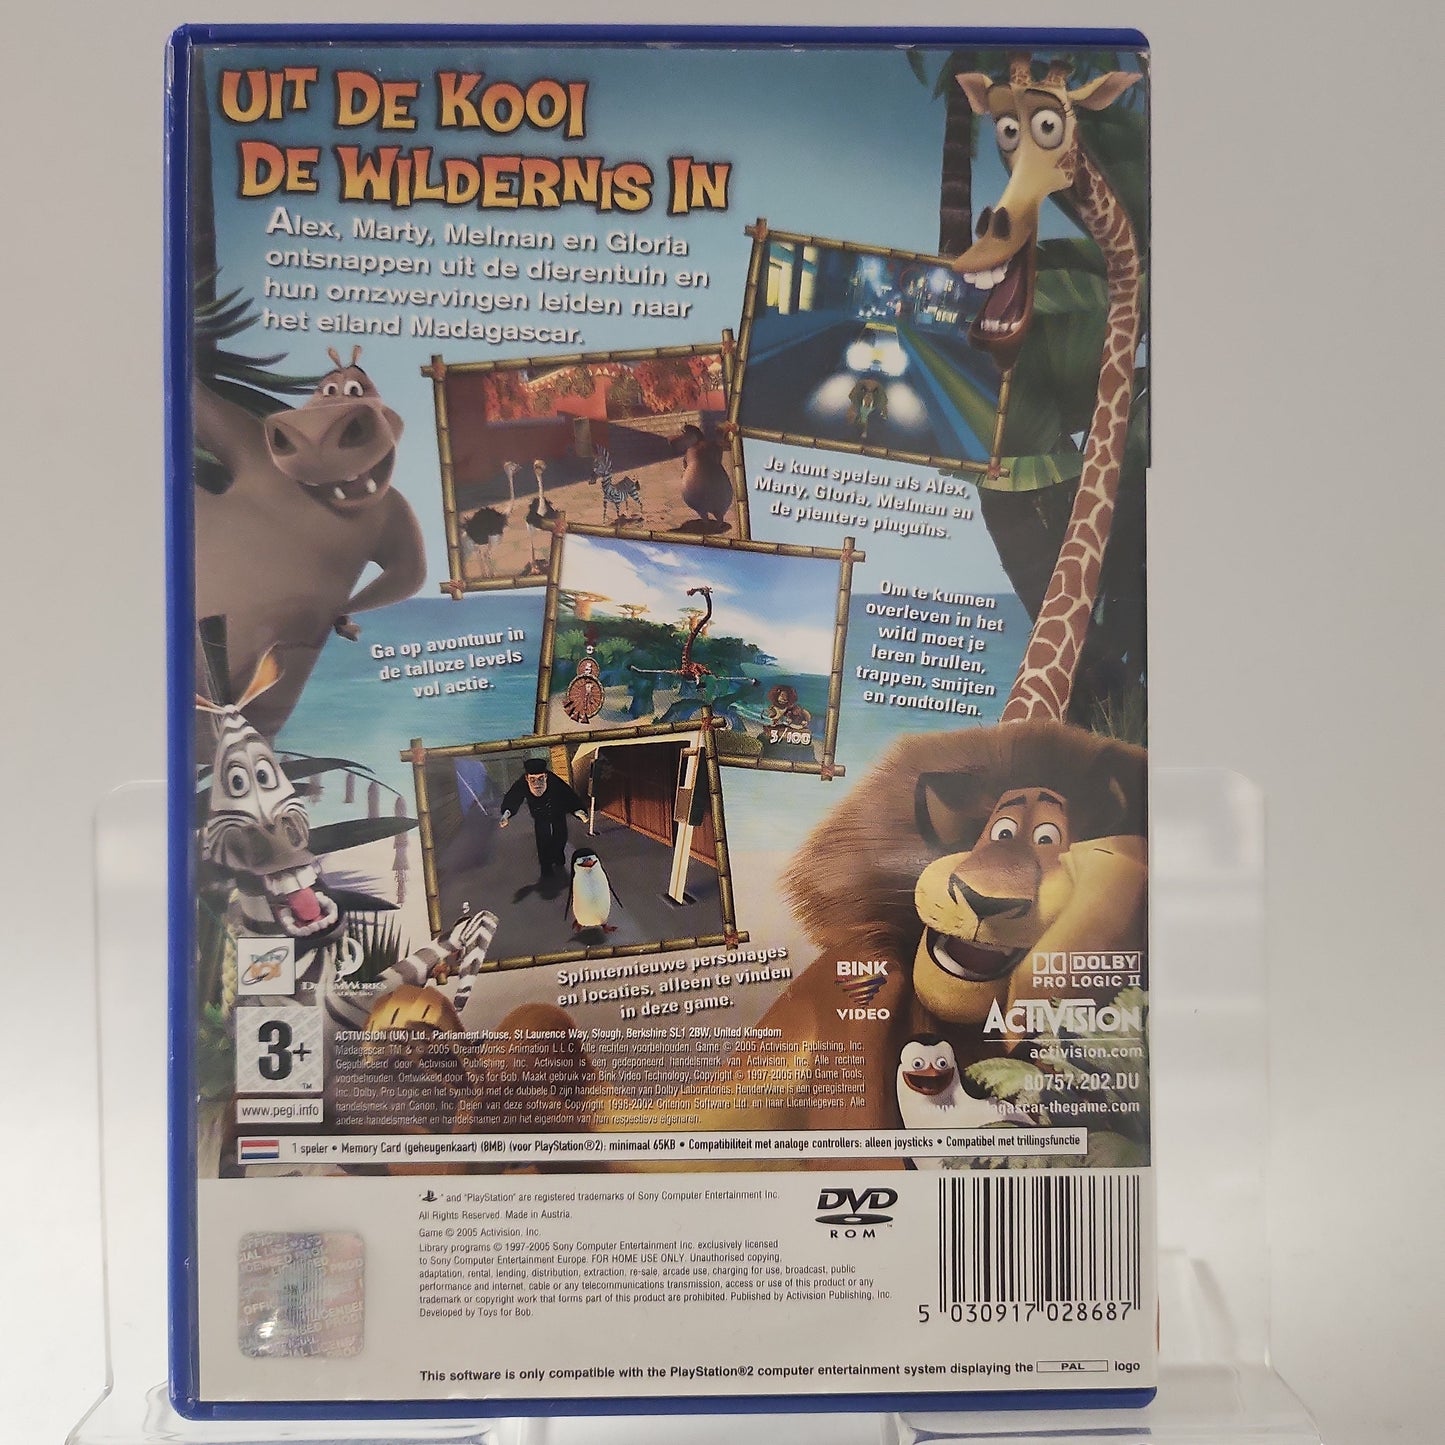 Madagascar (No Book) PlayStation 2